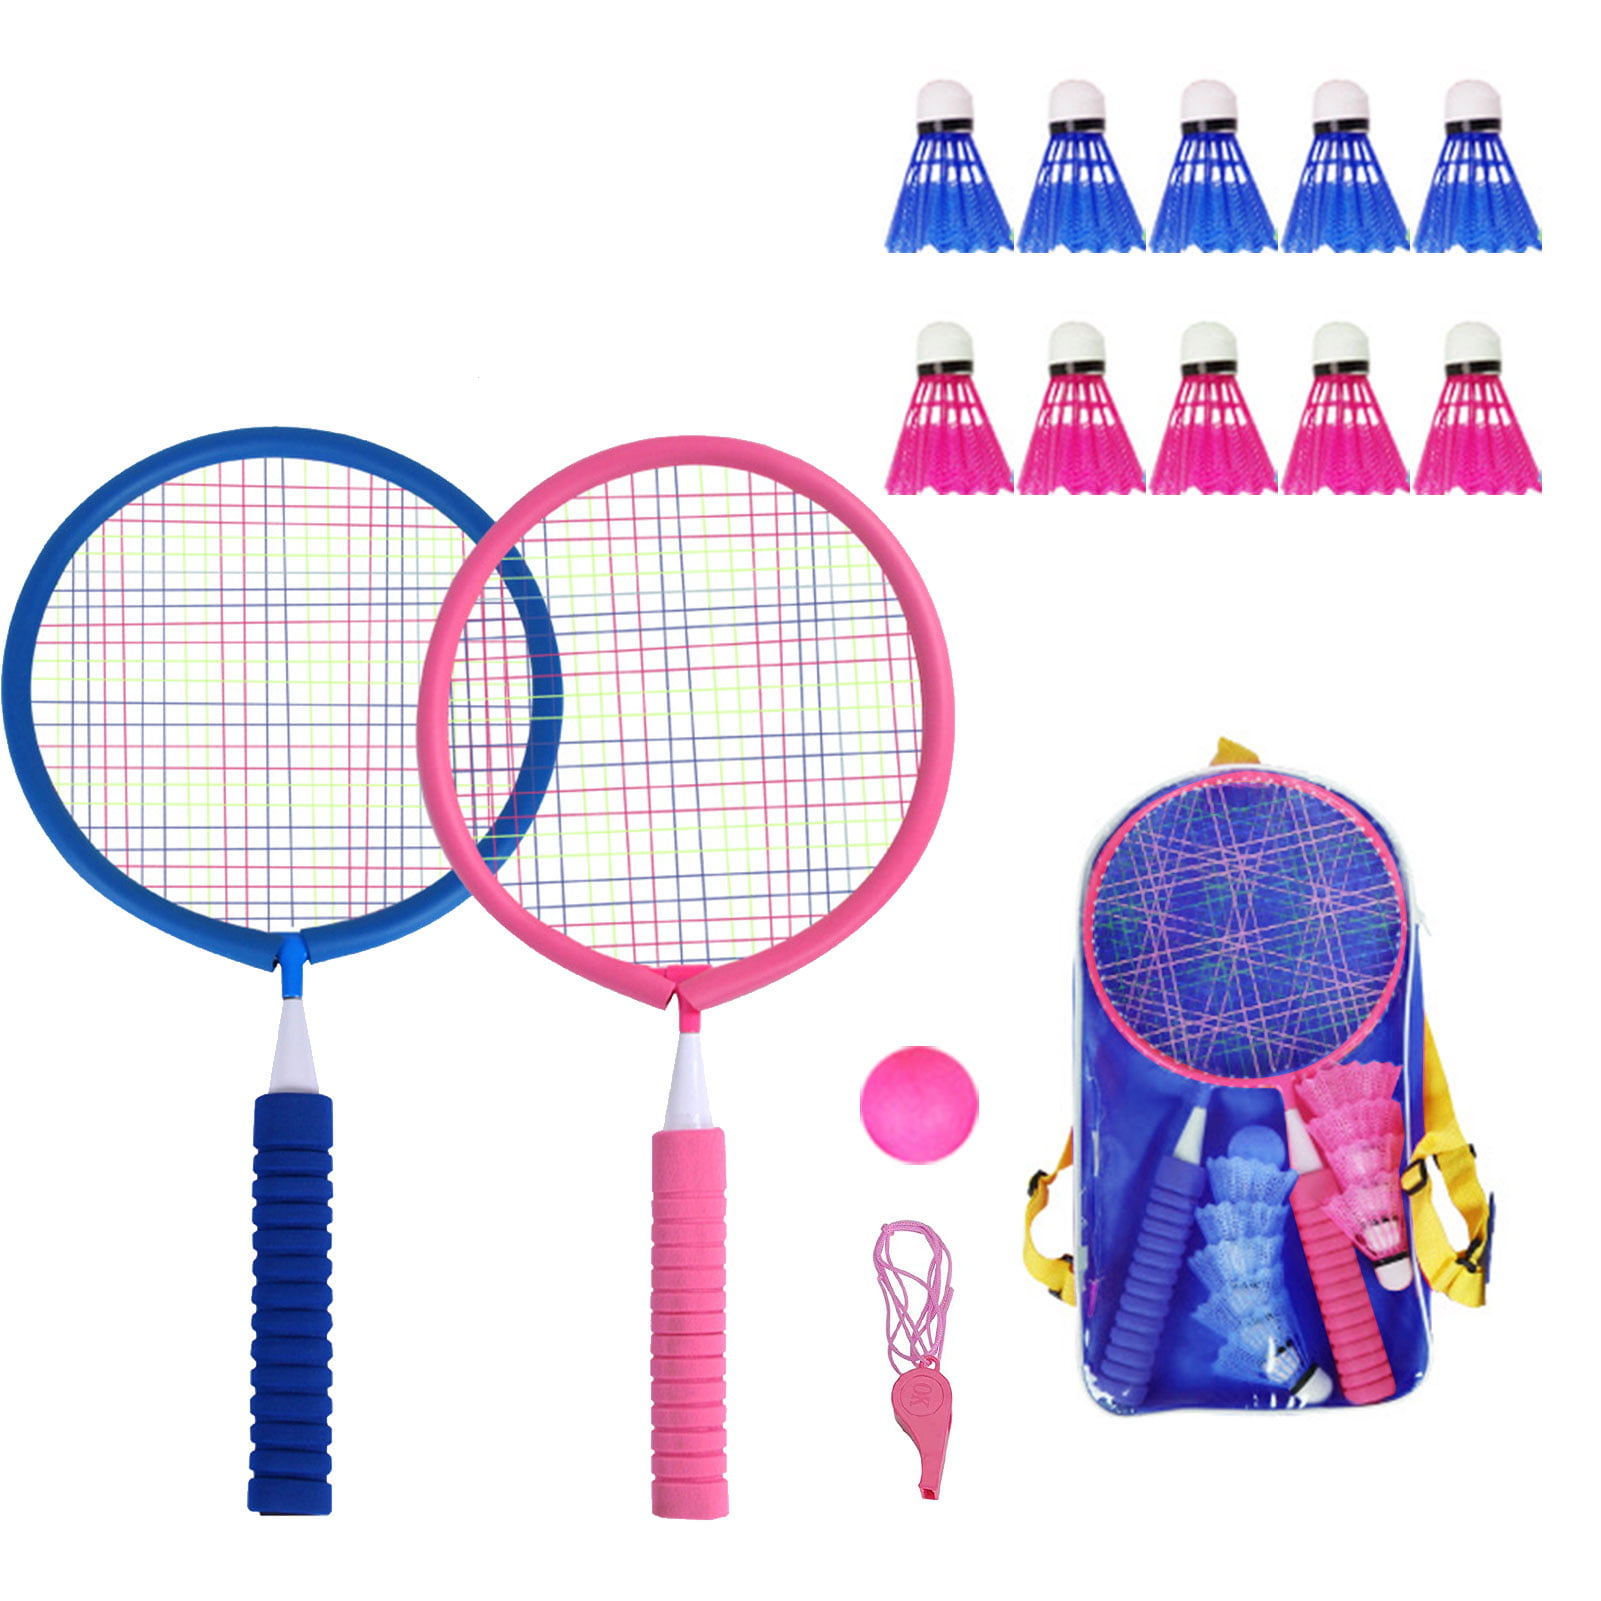 YIMORE Kids Racket Set of 5 with Badminton Tennis Balls Toys Gift for Boys 